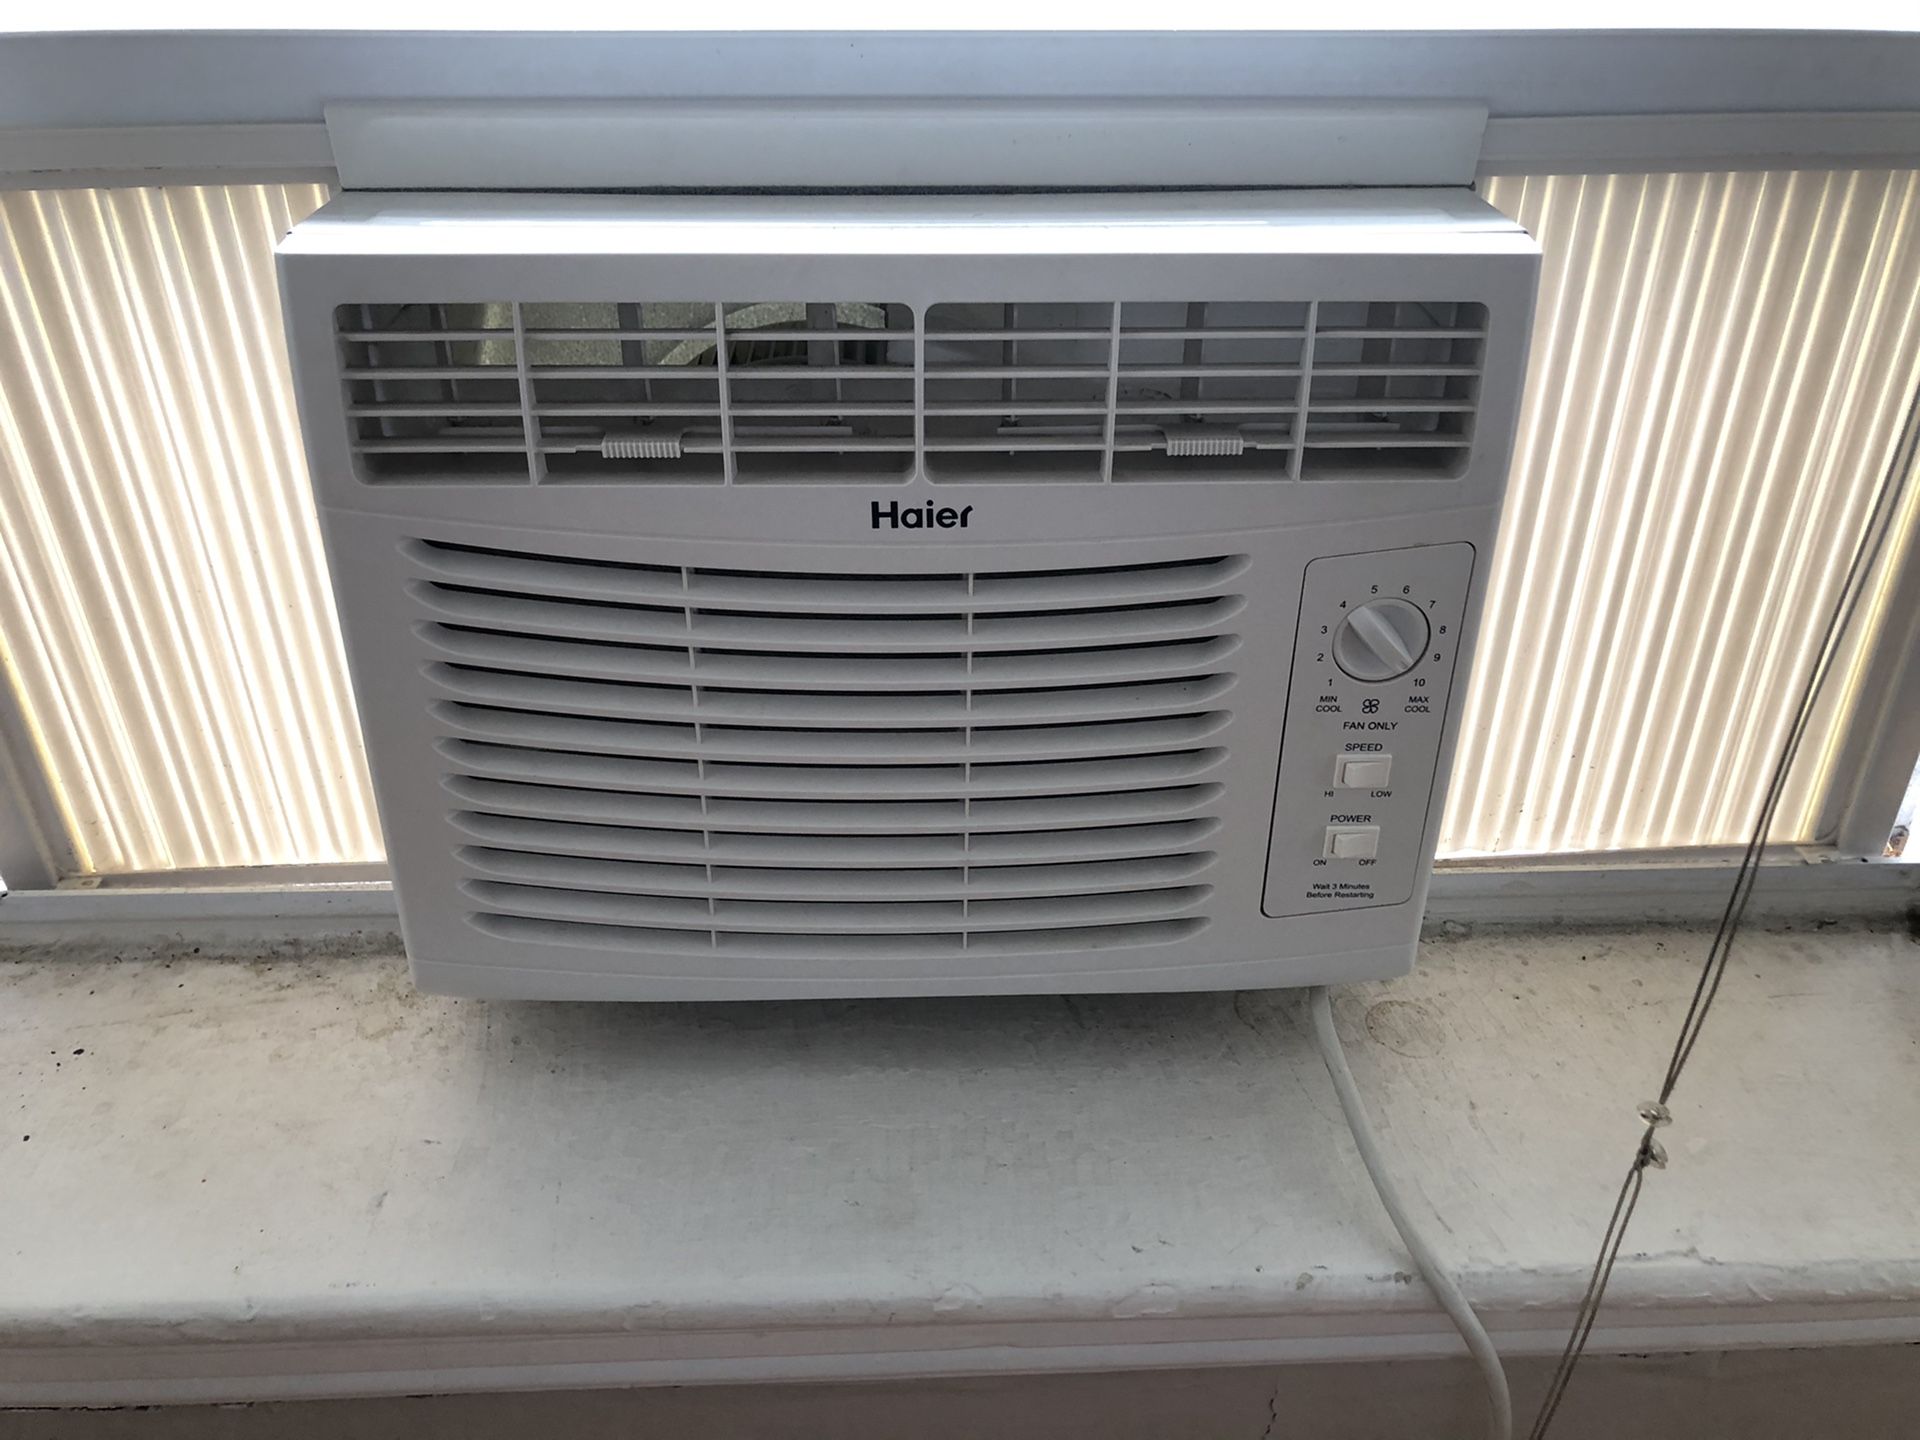 Haier window Air Conditioner unit